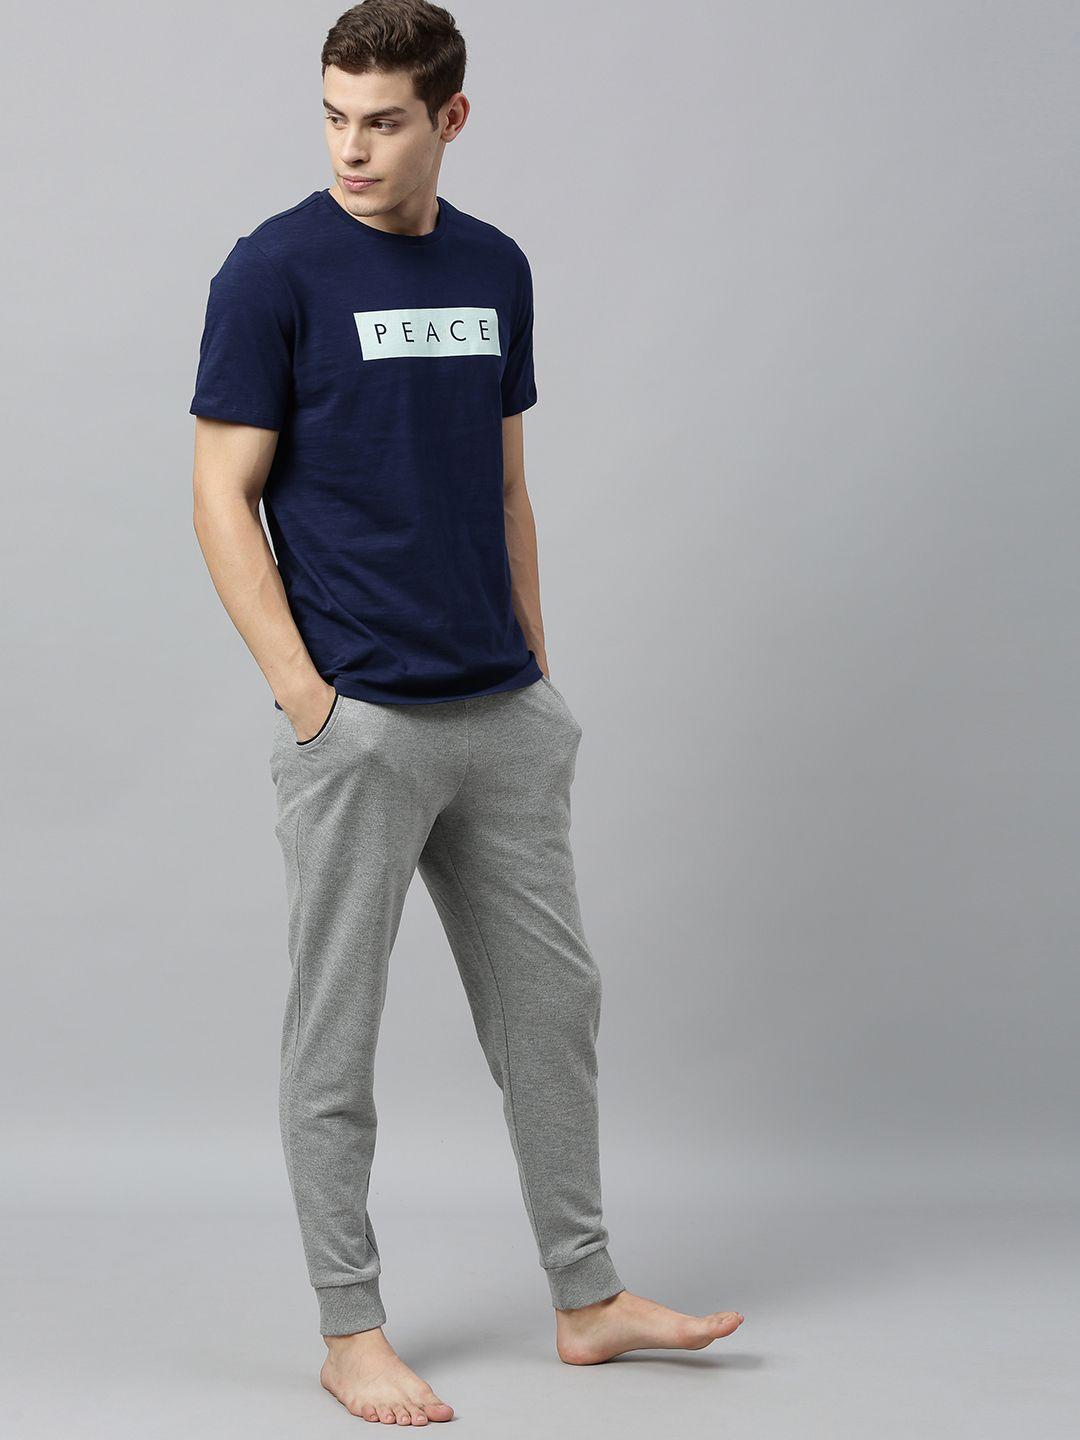 hrx-by-hrithik-roshan-men-navy-printed-bio-wash-yoga-pure-cotton-t-shirt